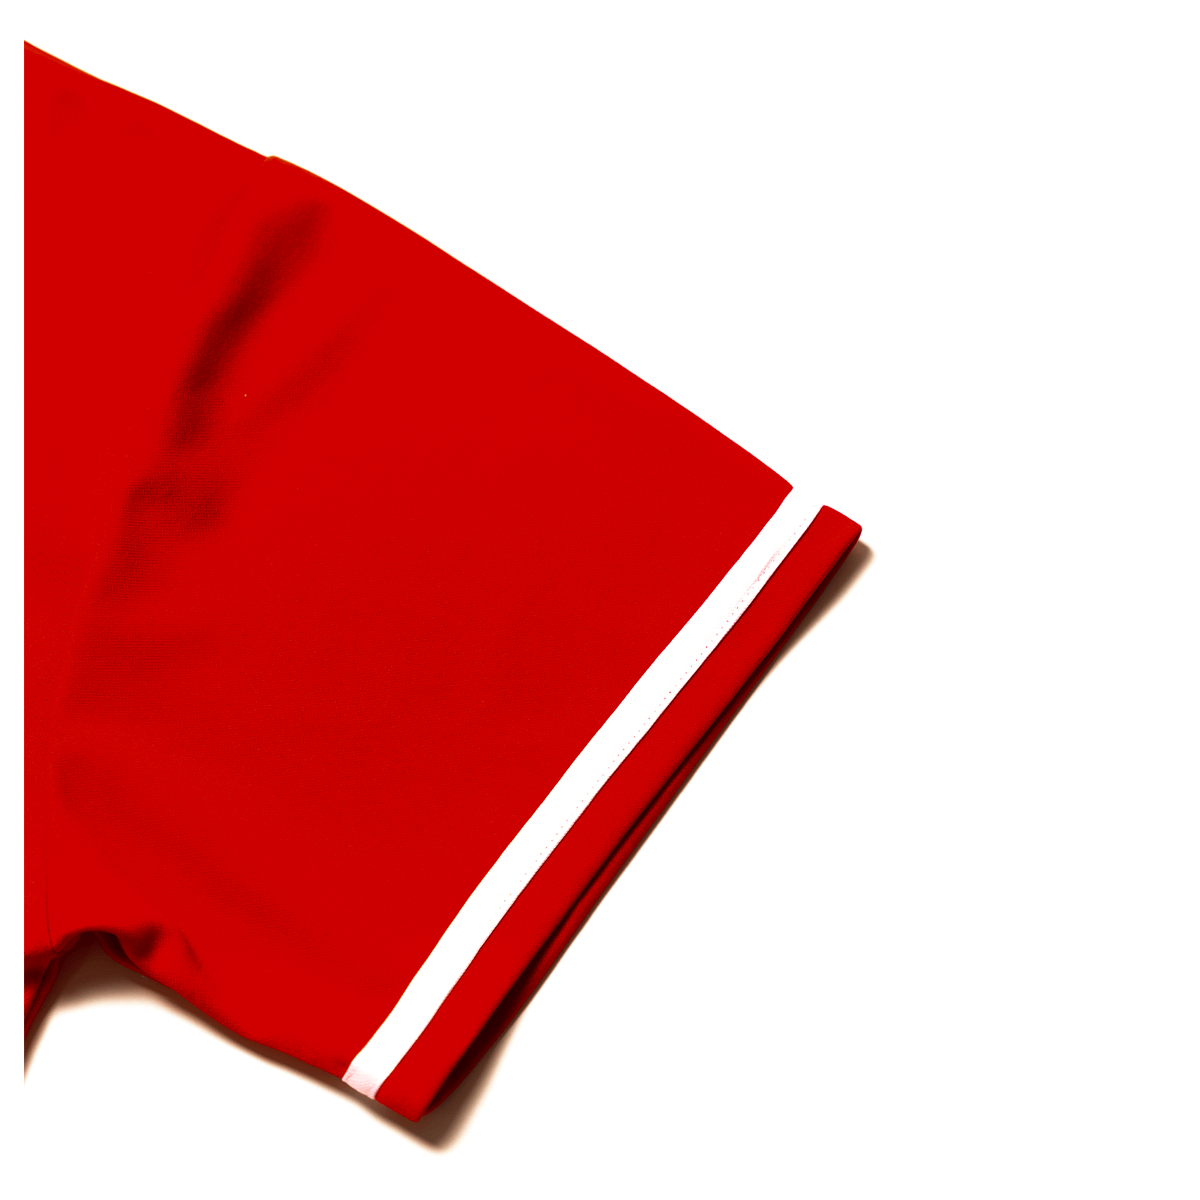 Crenshaw Baseball Jersey - Red – The Marathon Clothing